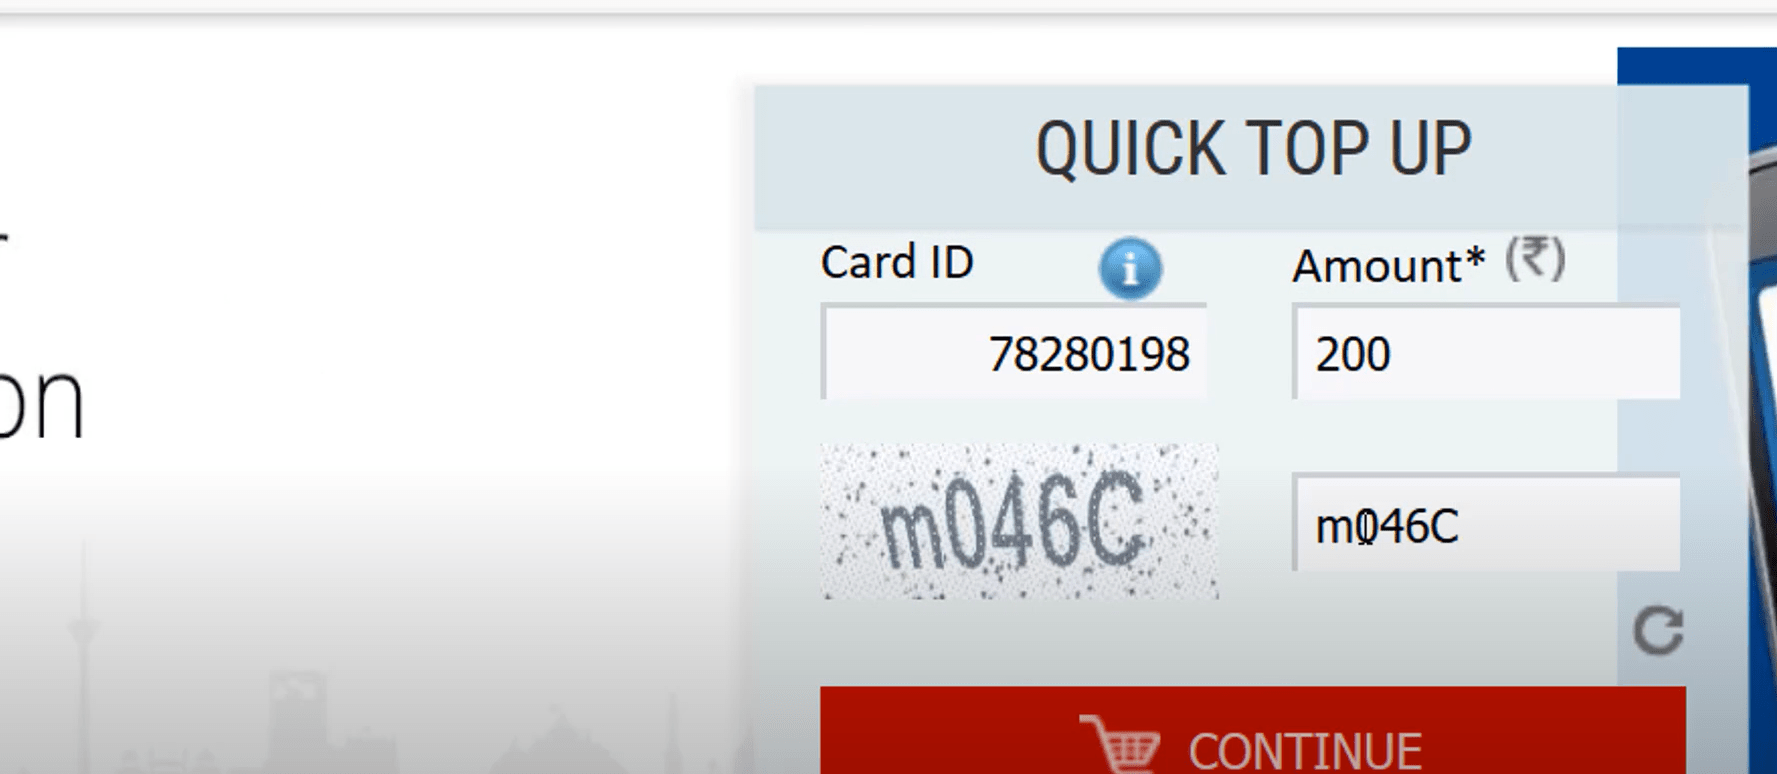 How to Recharge Delhi Metro Card Online